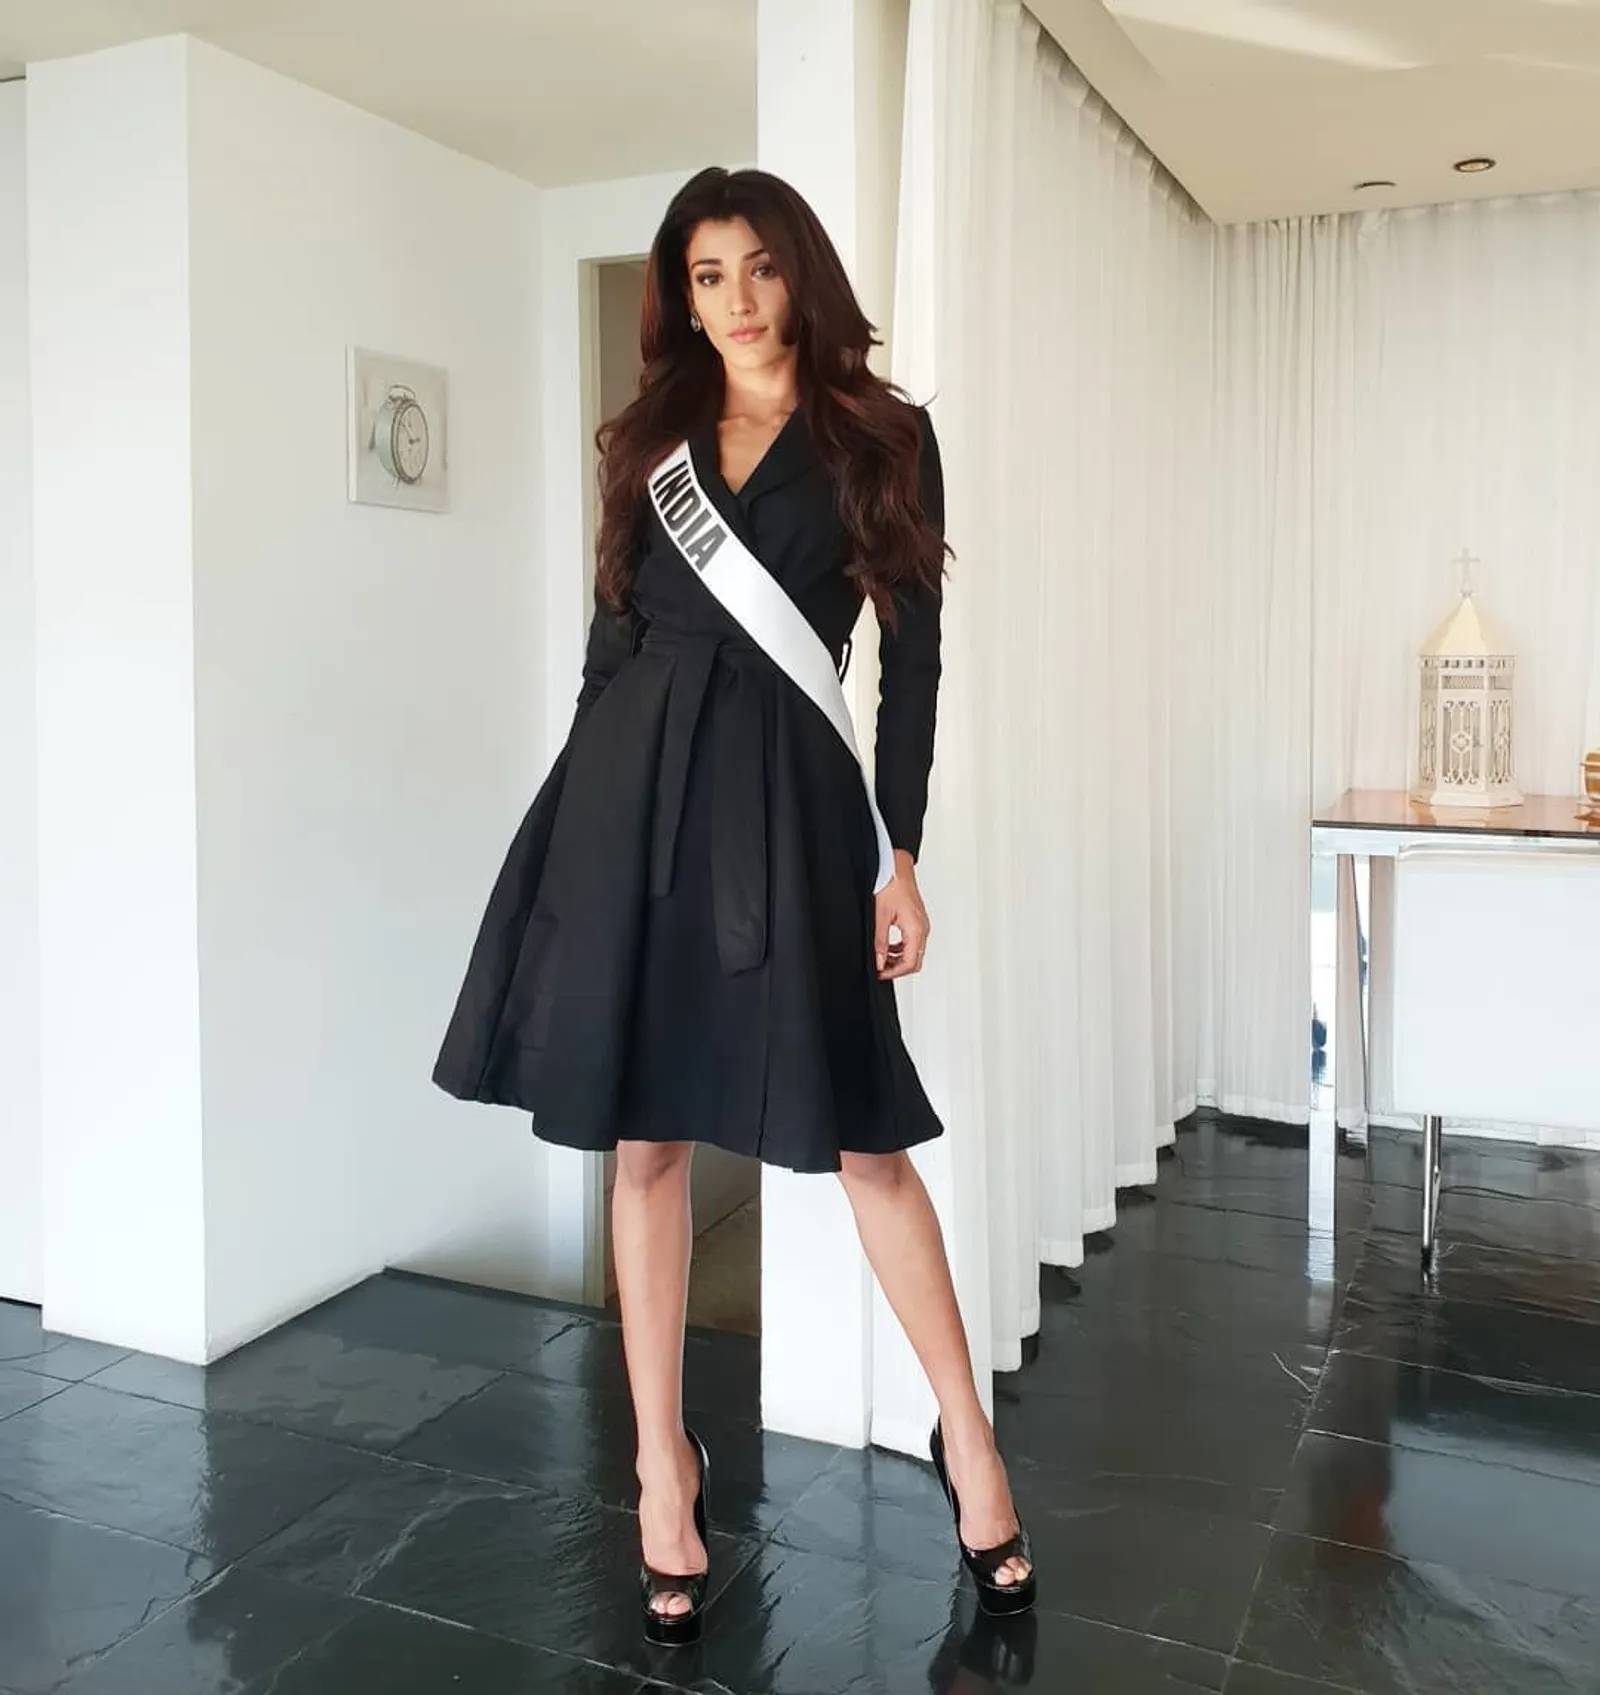 Gaun Melorot dan 4 Fakta yang Bikin Tercengang di Miss Universe 2018